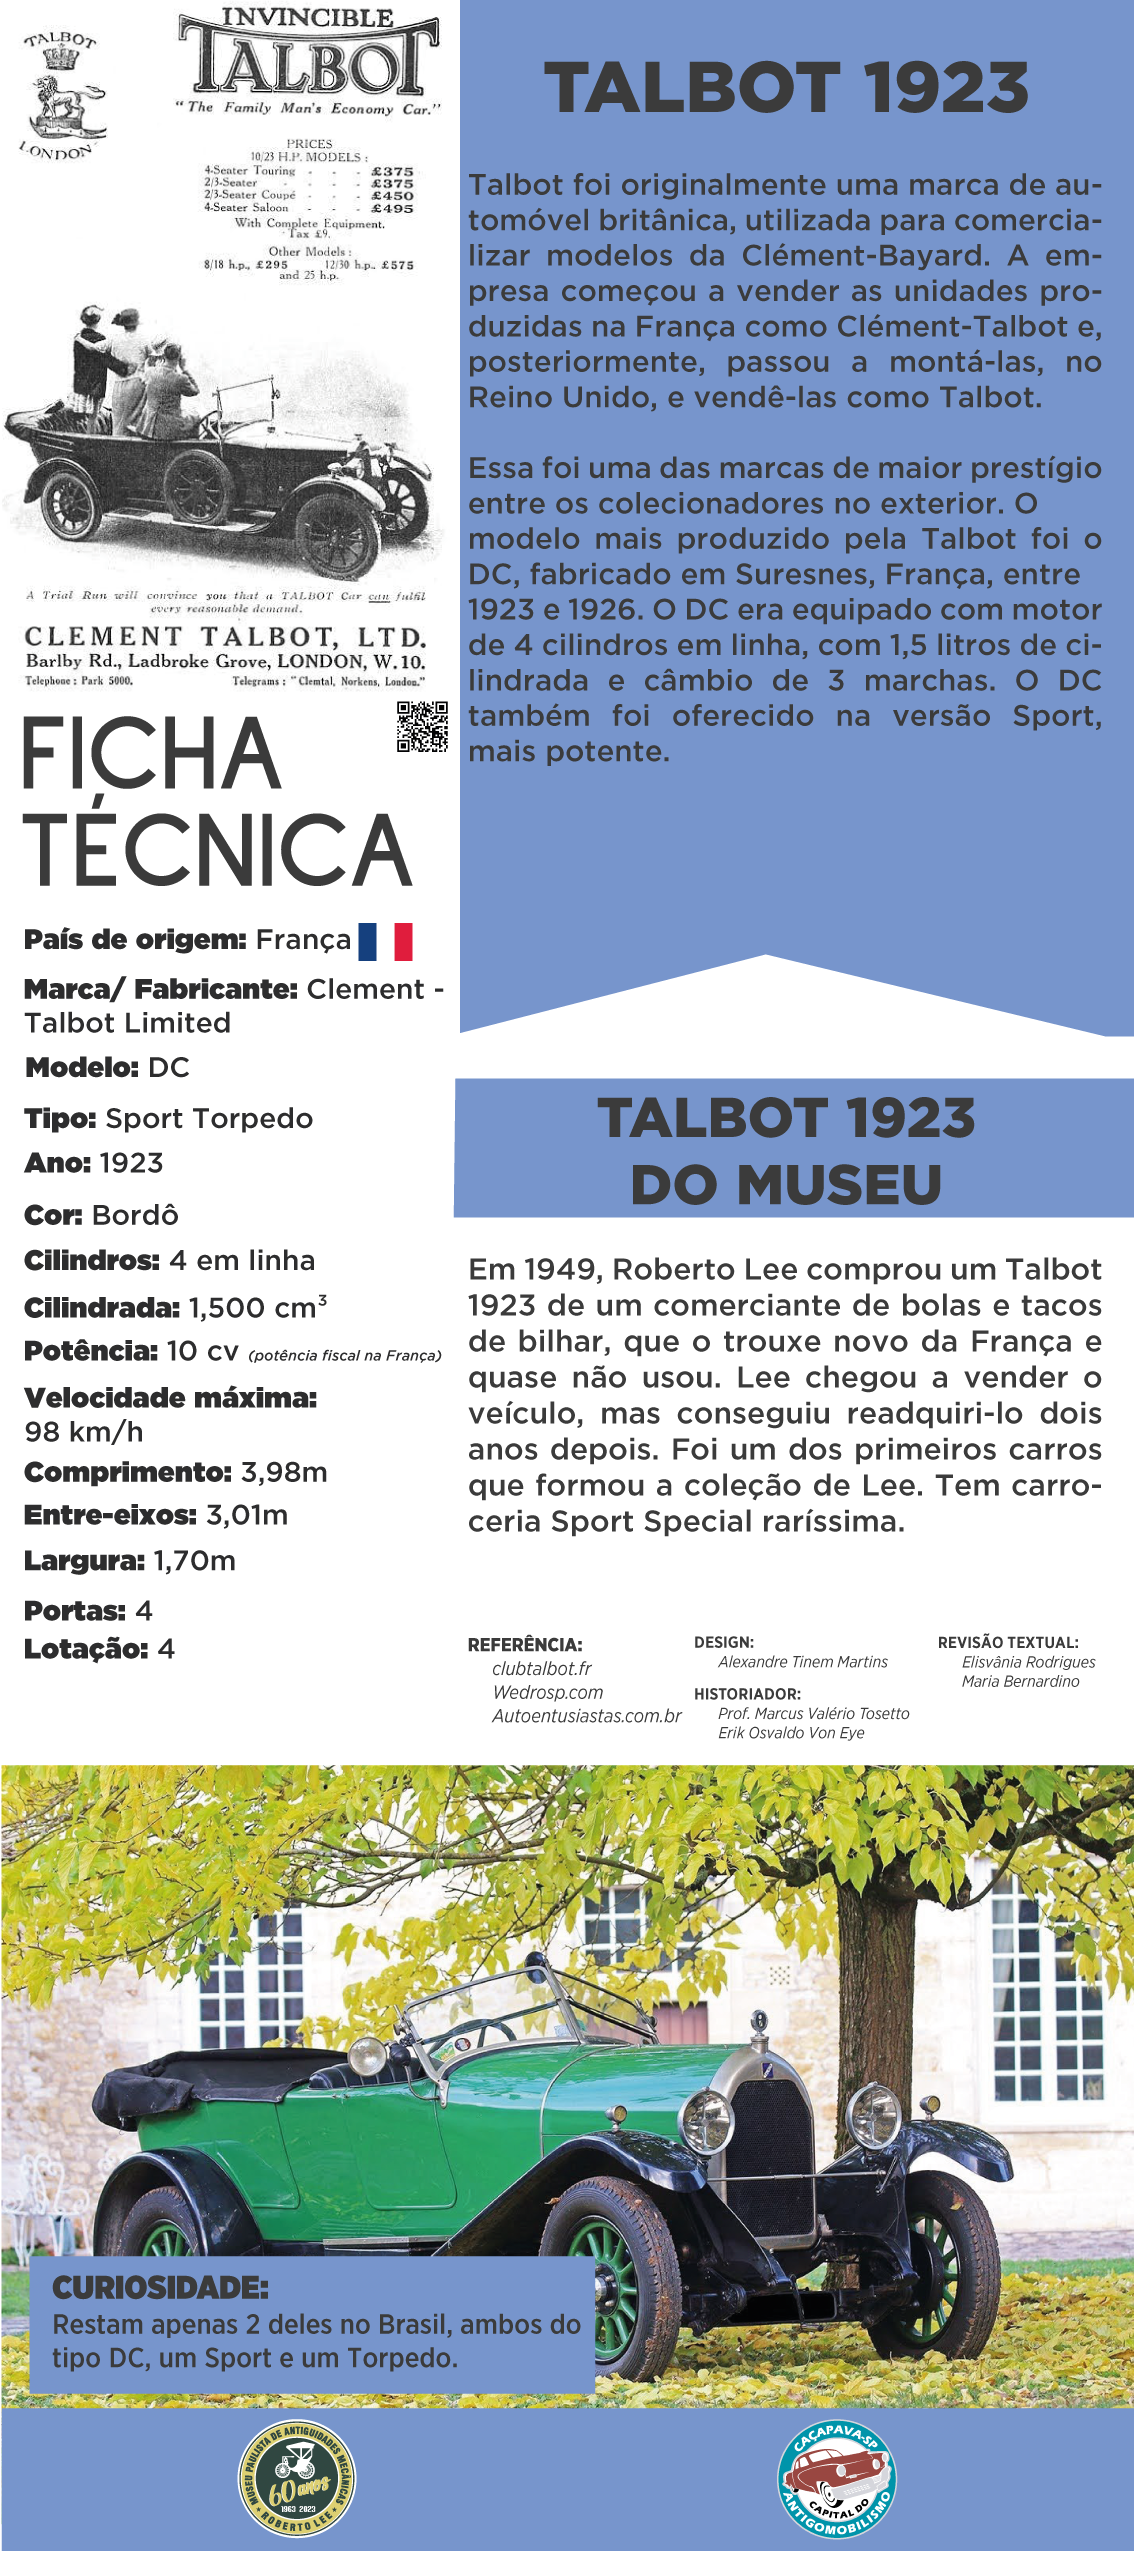 Tabolt-23-Museu-Roberto-Lee-1,80-x-0,80m